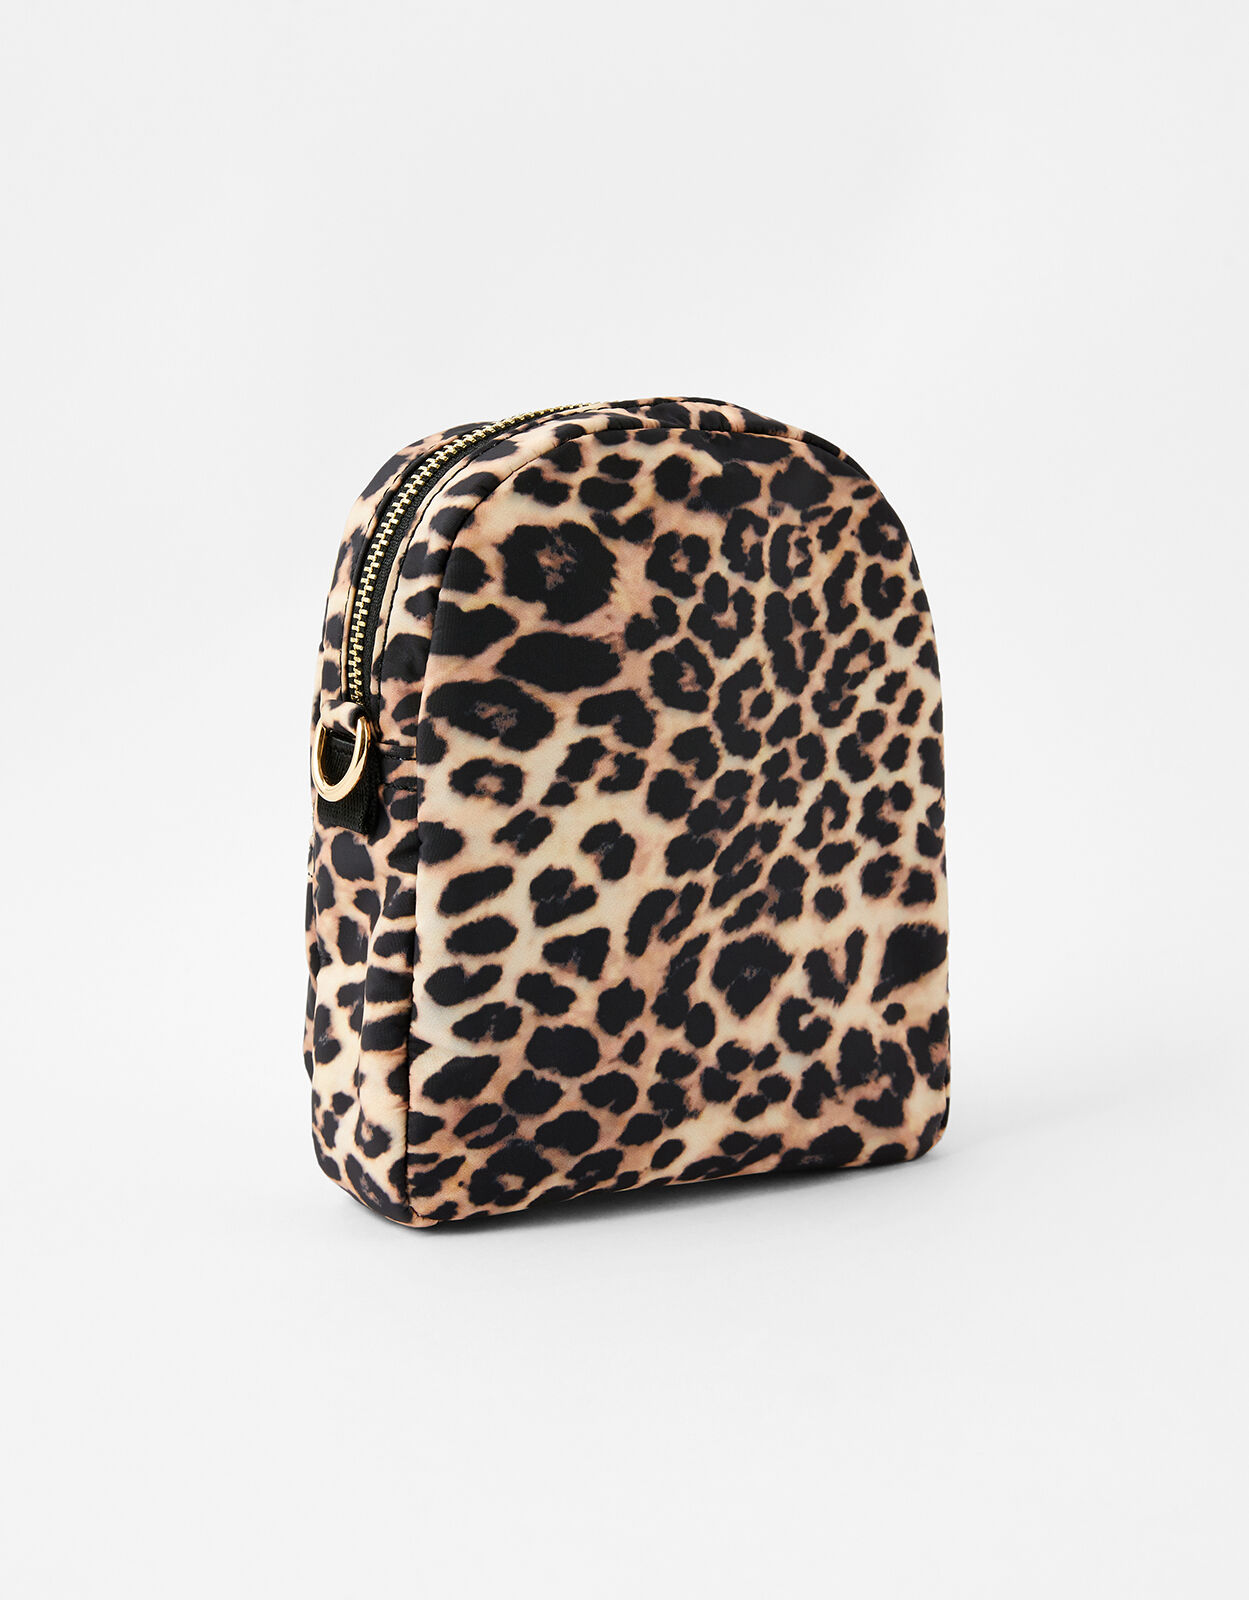 Gillie G's | Soruka Unique Leather Bags and Purses